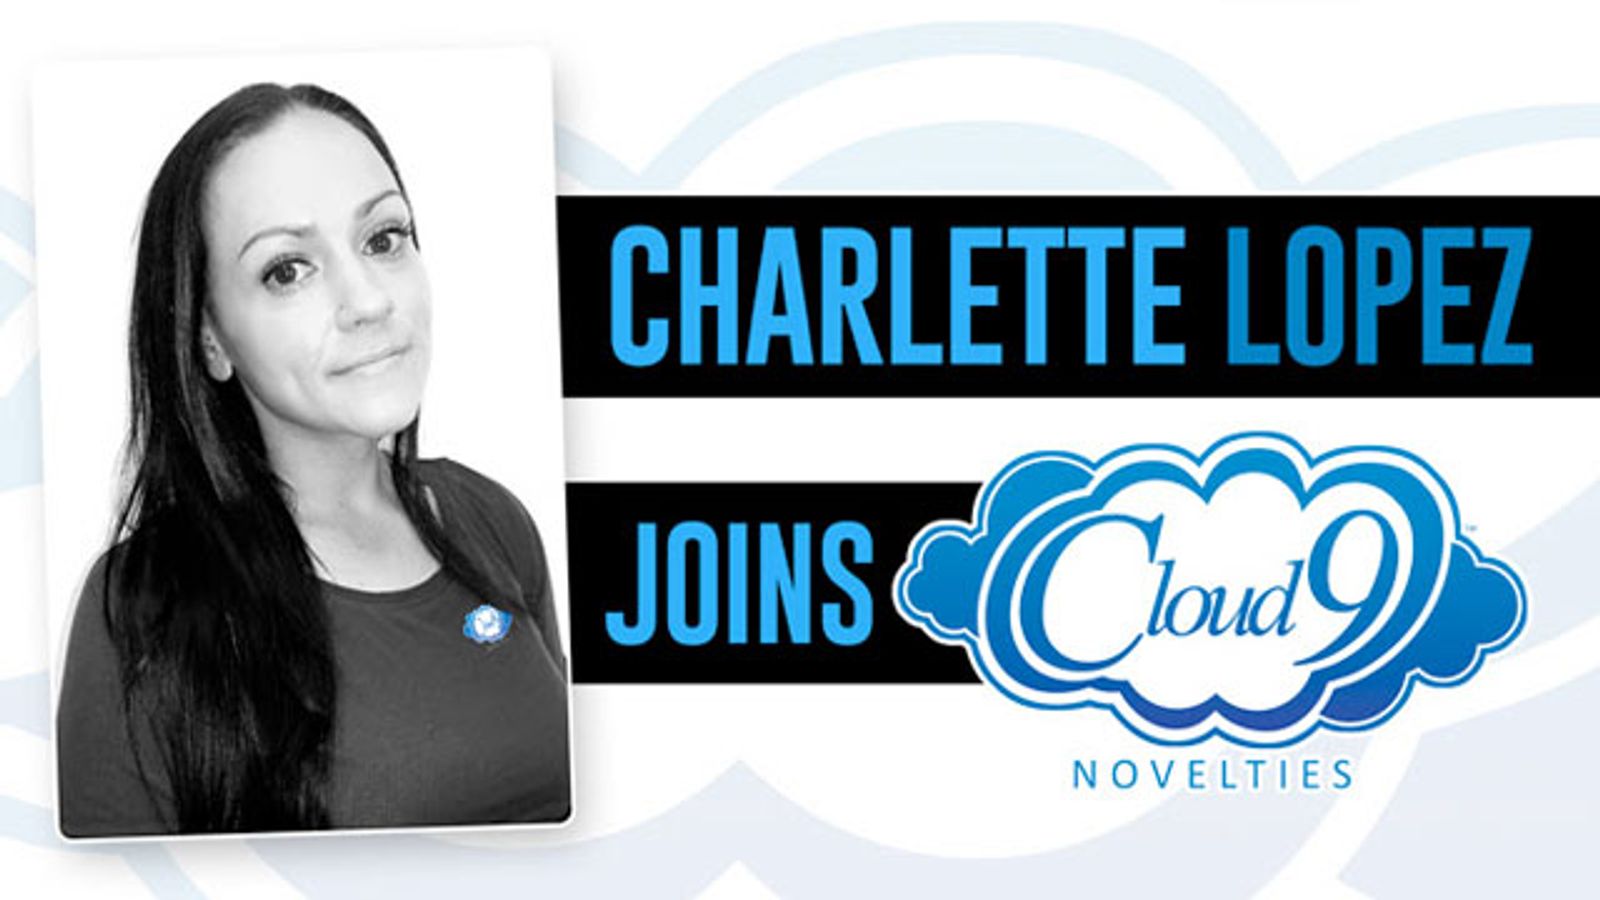 Charlette Lopez Joins Cloud 9 Novelties